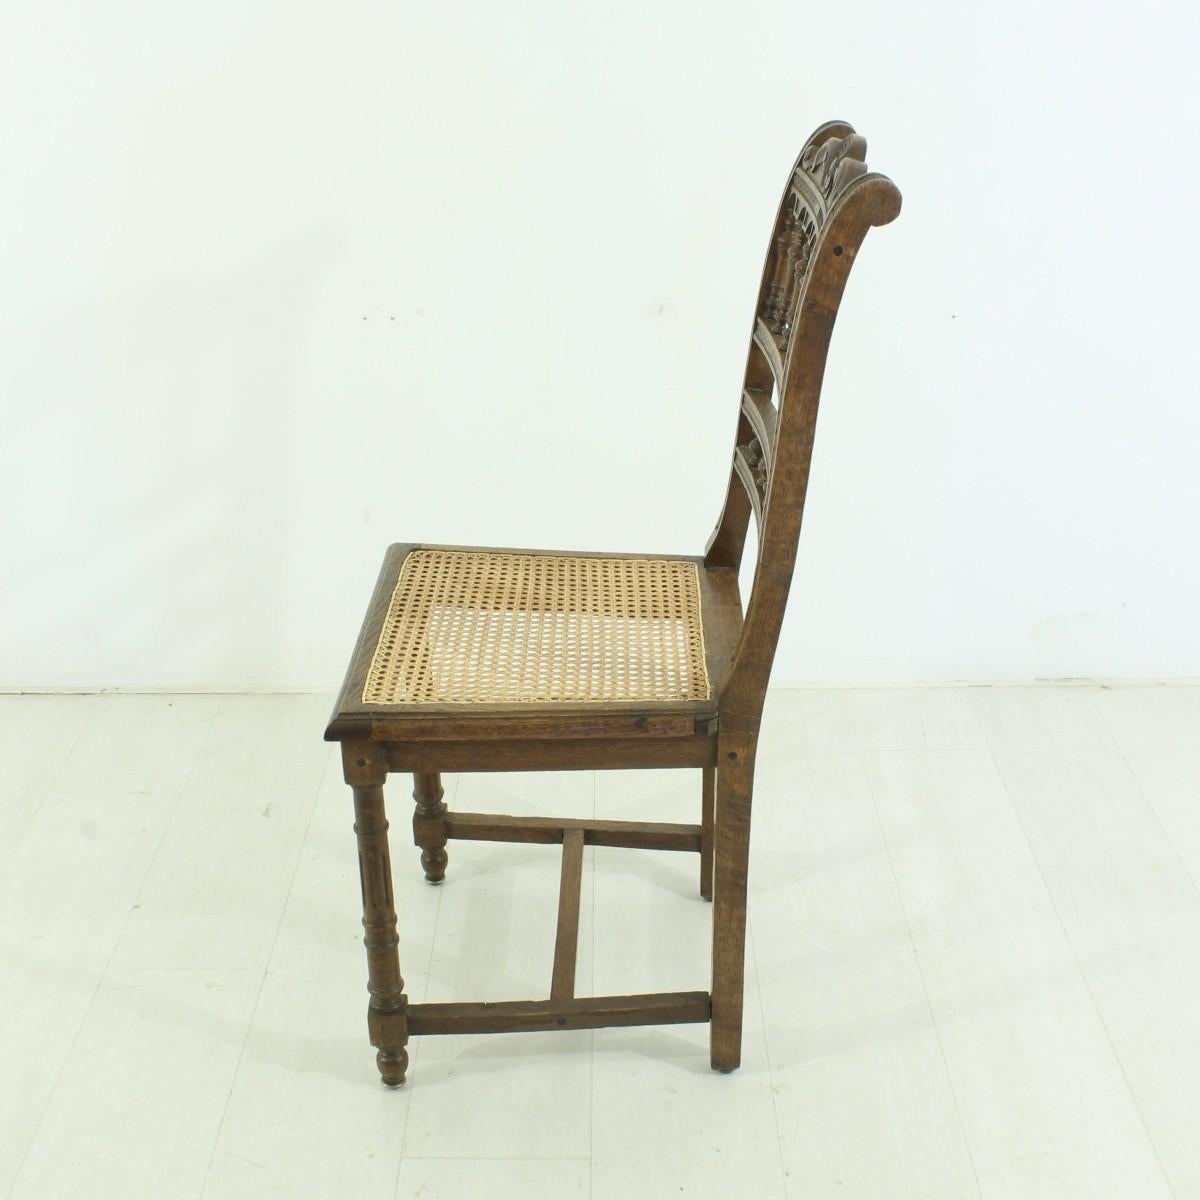 Early 20th Century Antique Chair, circa 1900